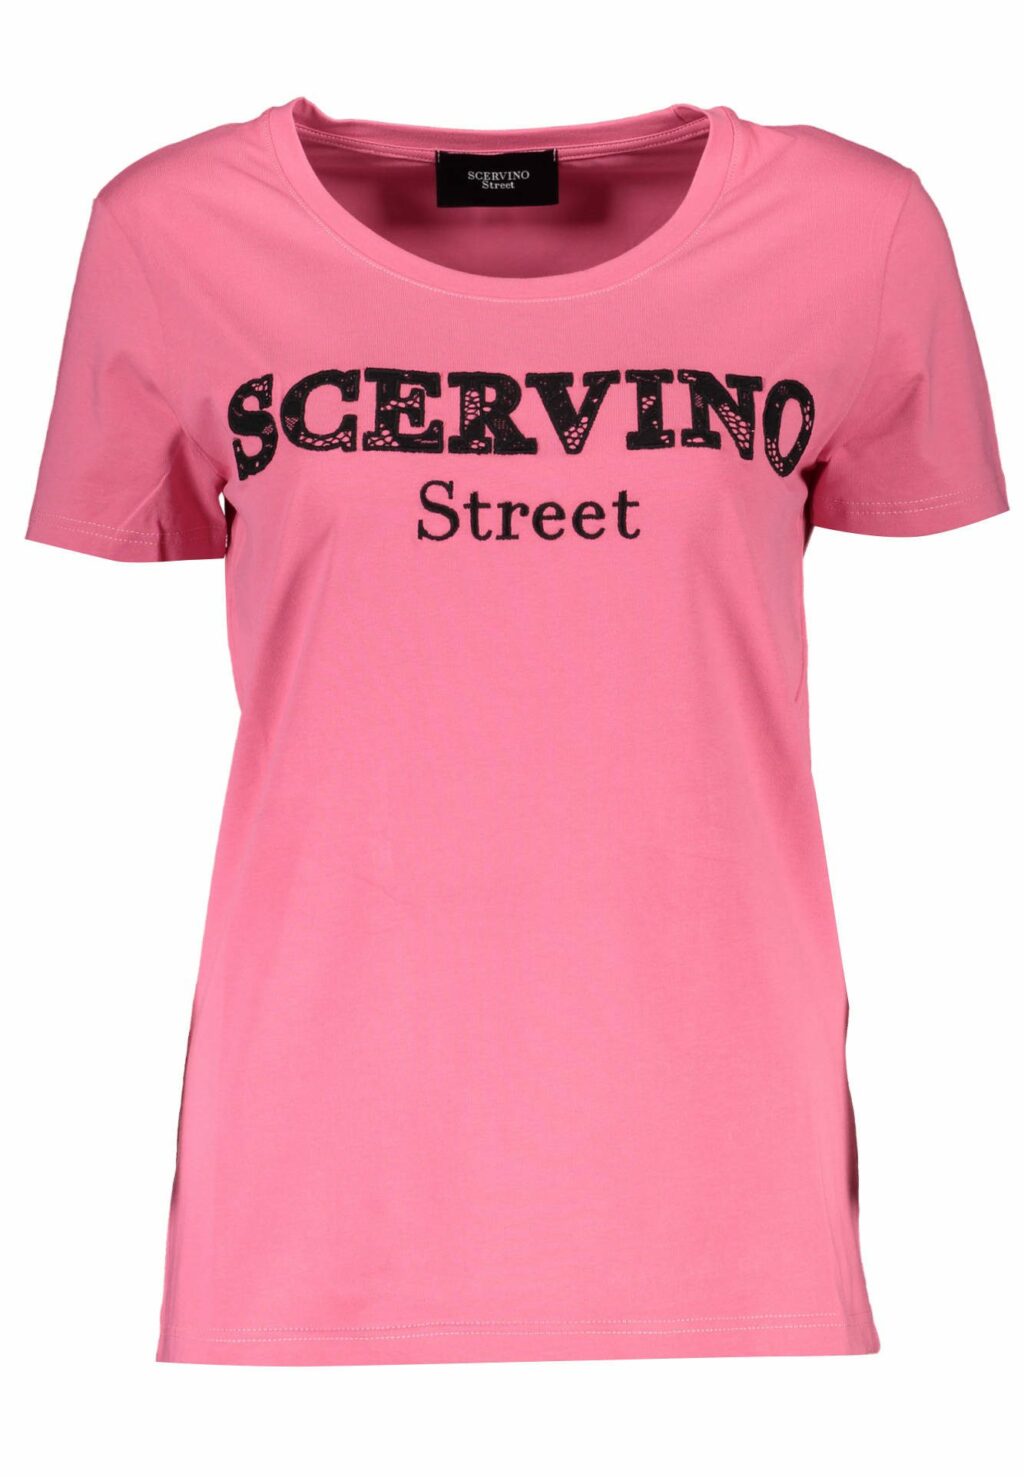 SCERVINO STREET WOMEN'S SHORT SLEEVE T-SHIRT PINK D38TL0699-TSD006_ROSA_SC007-CORALLO